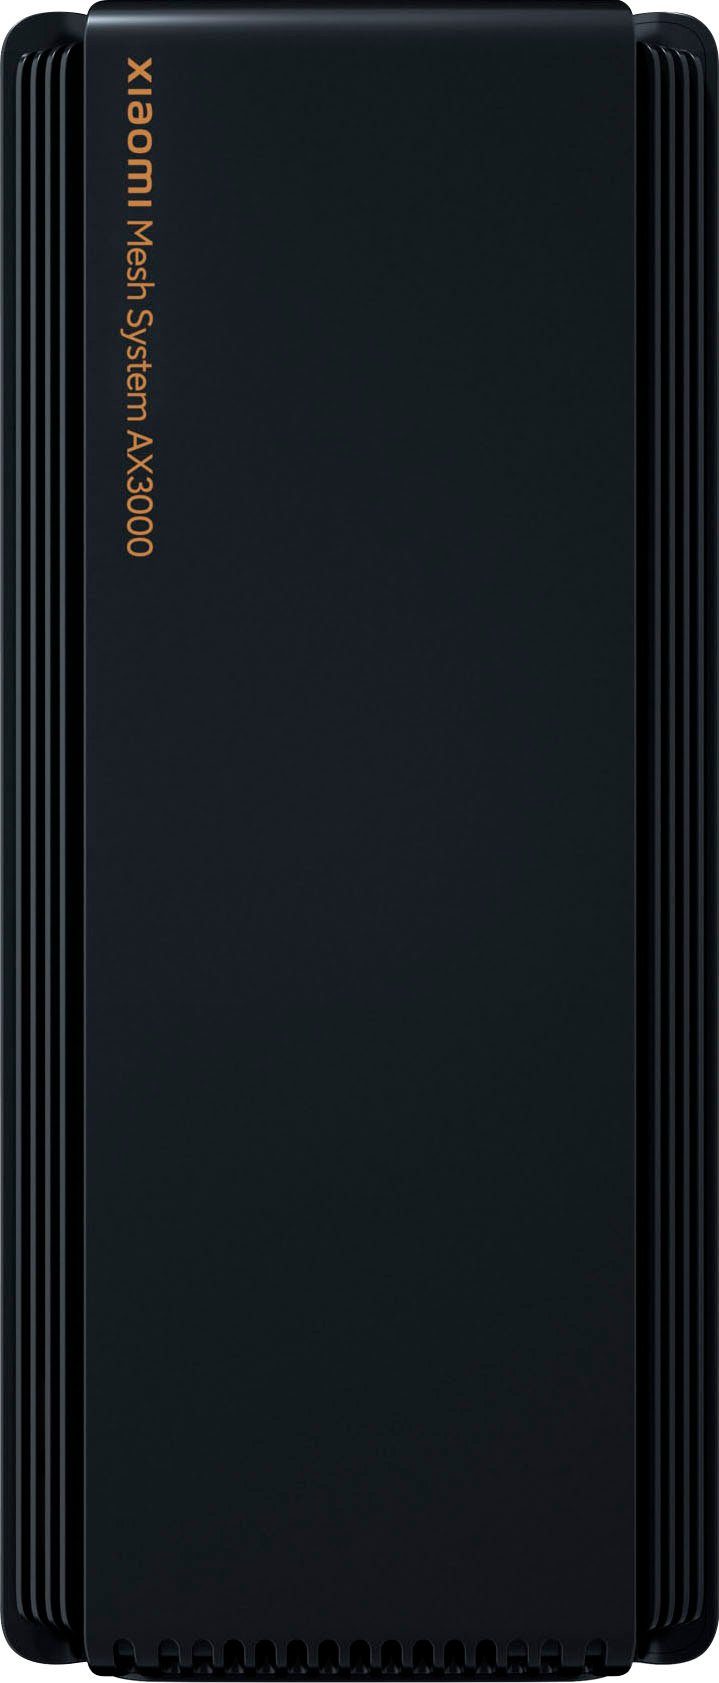 1,00 Prozessor mit Dual-Core AX3000 A53 Qualcomm Xiaomi WLAN-Router, GHz RA82